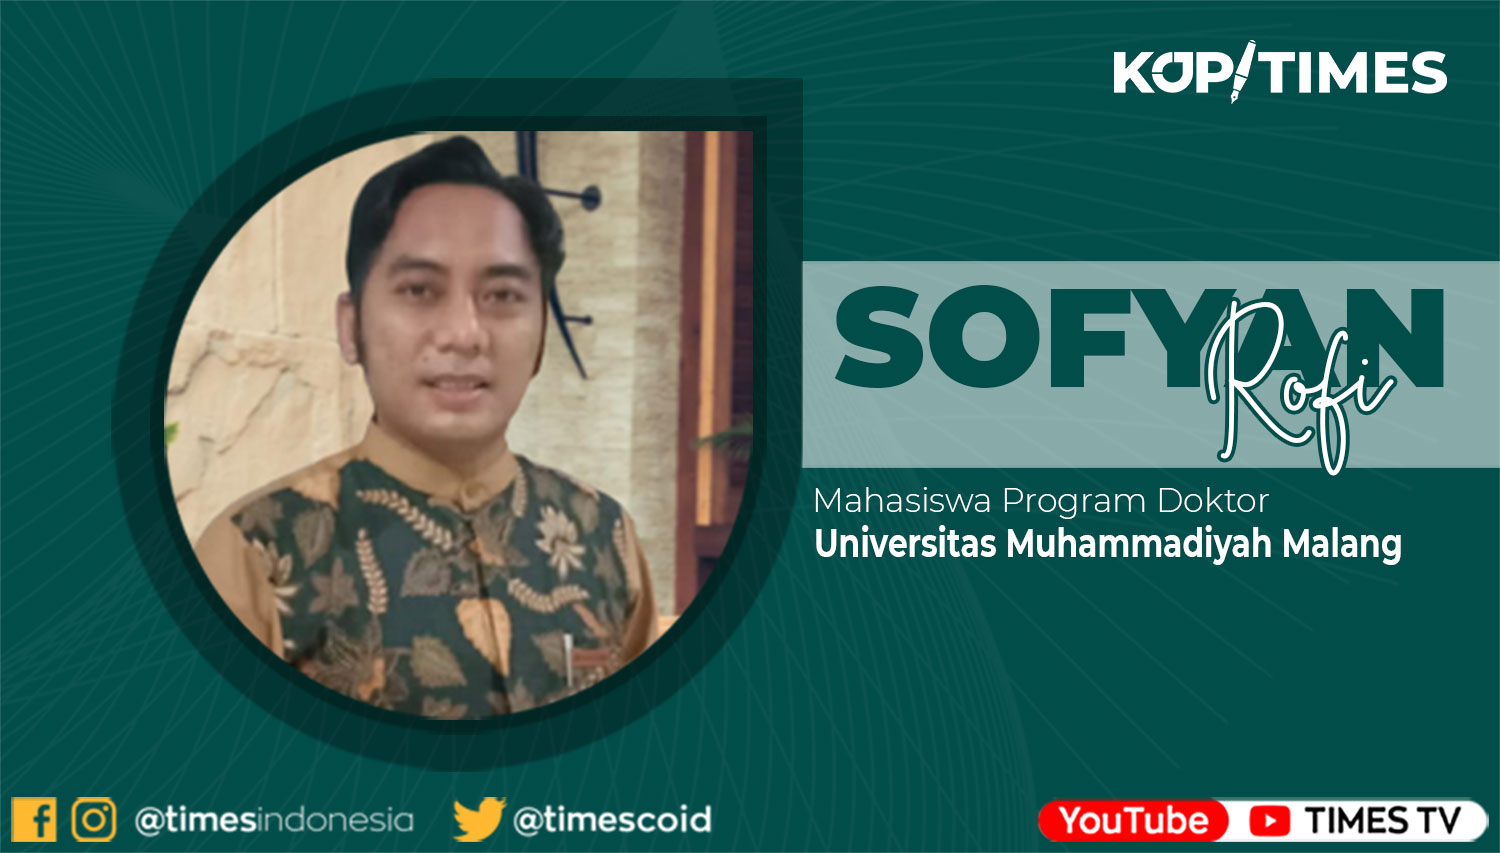 Sofyan Rofi, Mahasiswa Program Doktor di Universitas Muhammadiyah Malang